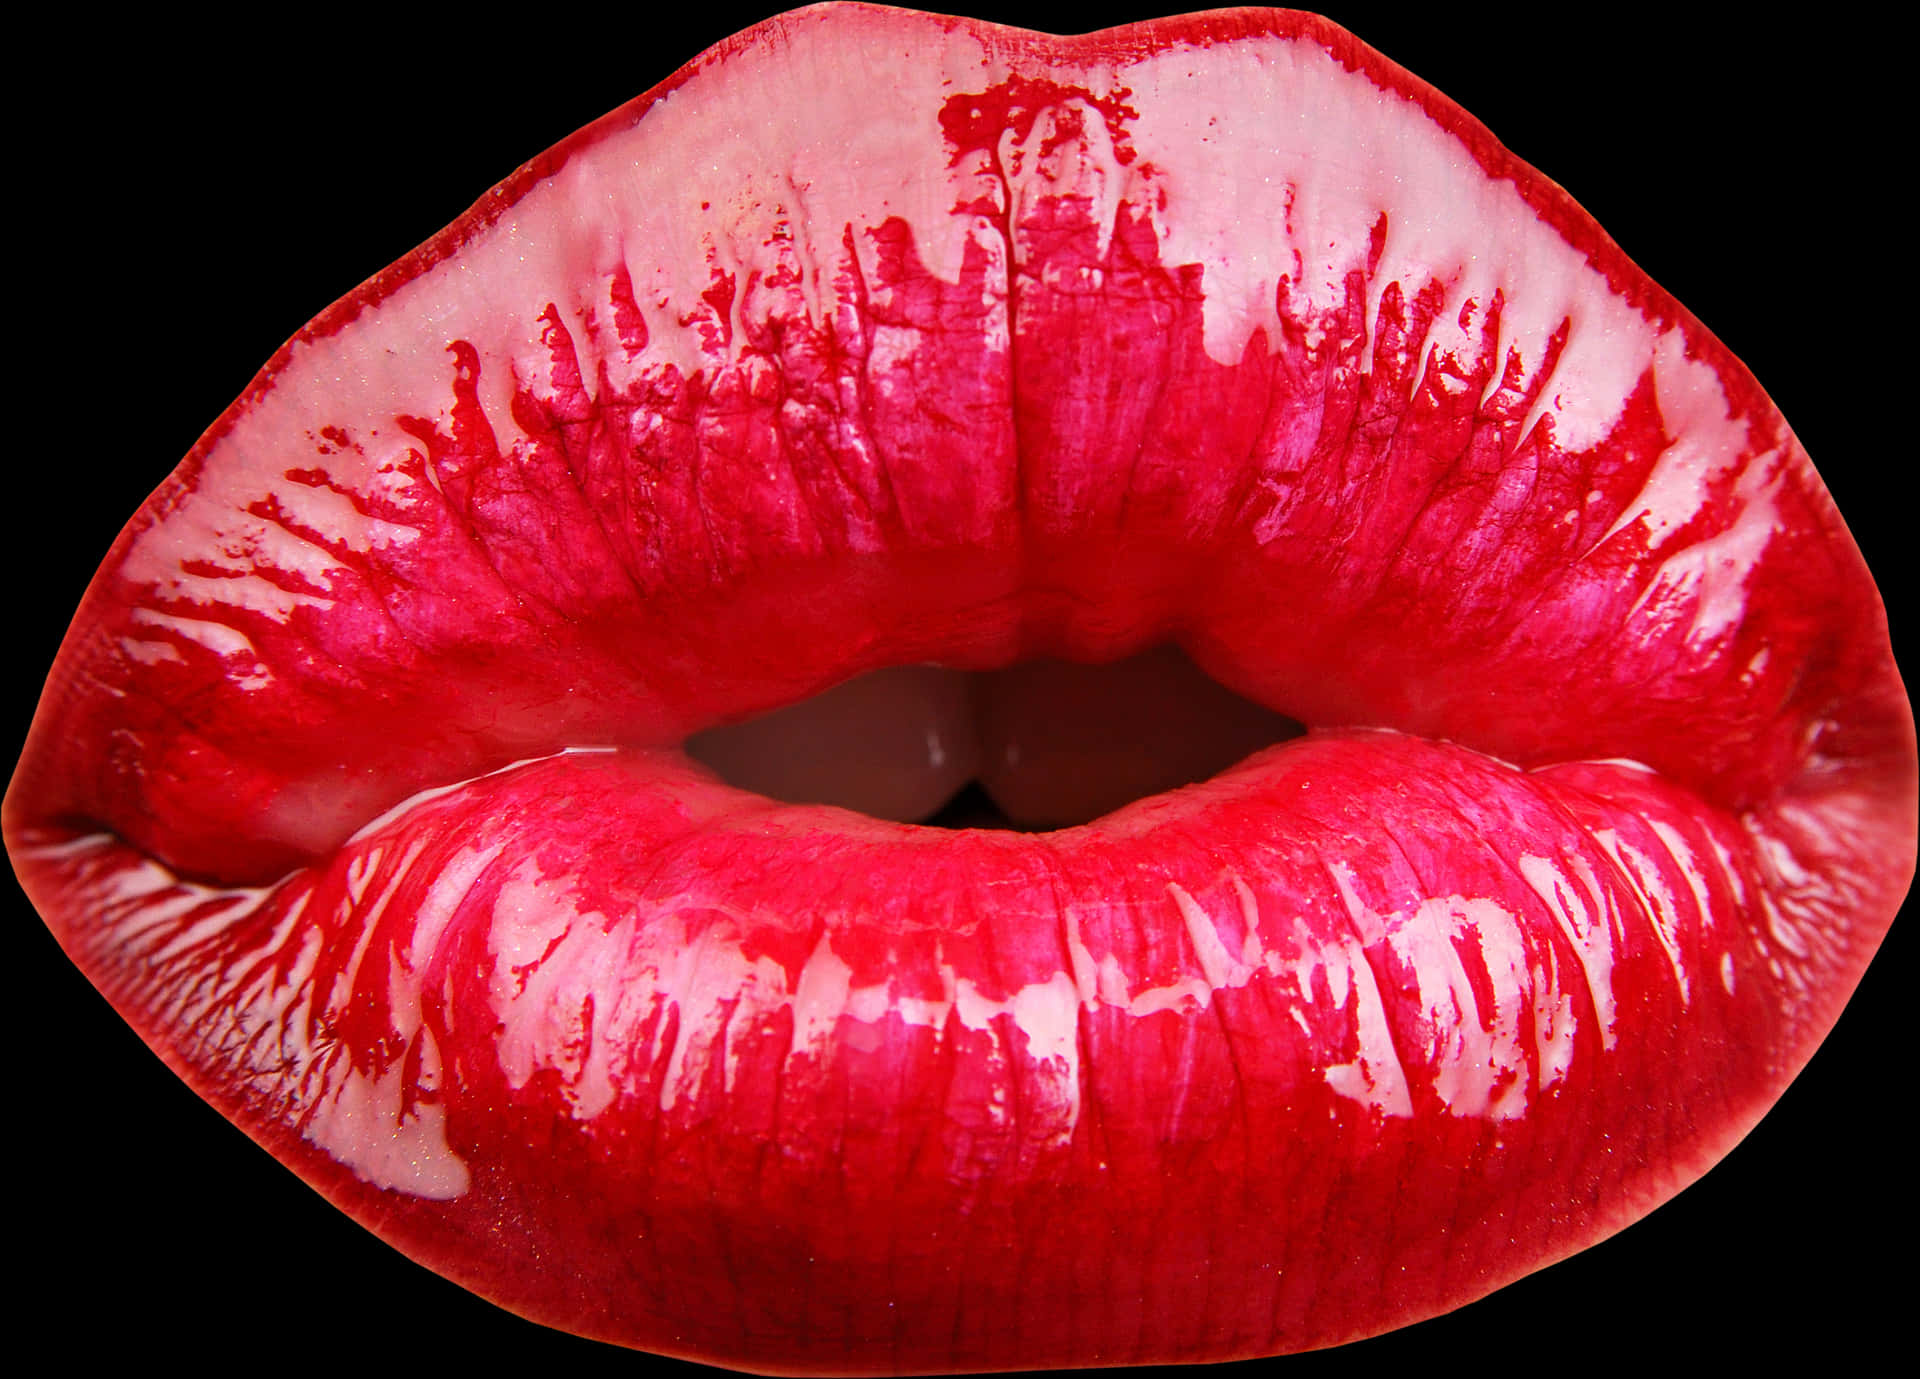 Red Lipstick Kiss Closeup.jpg PNG image